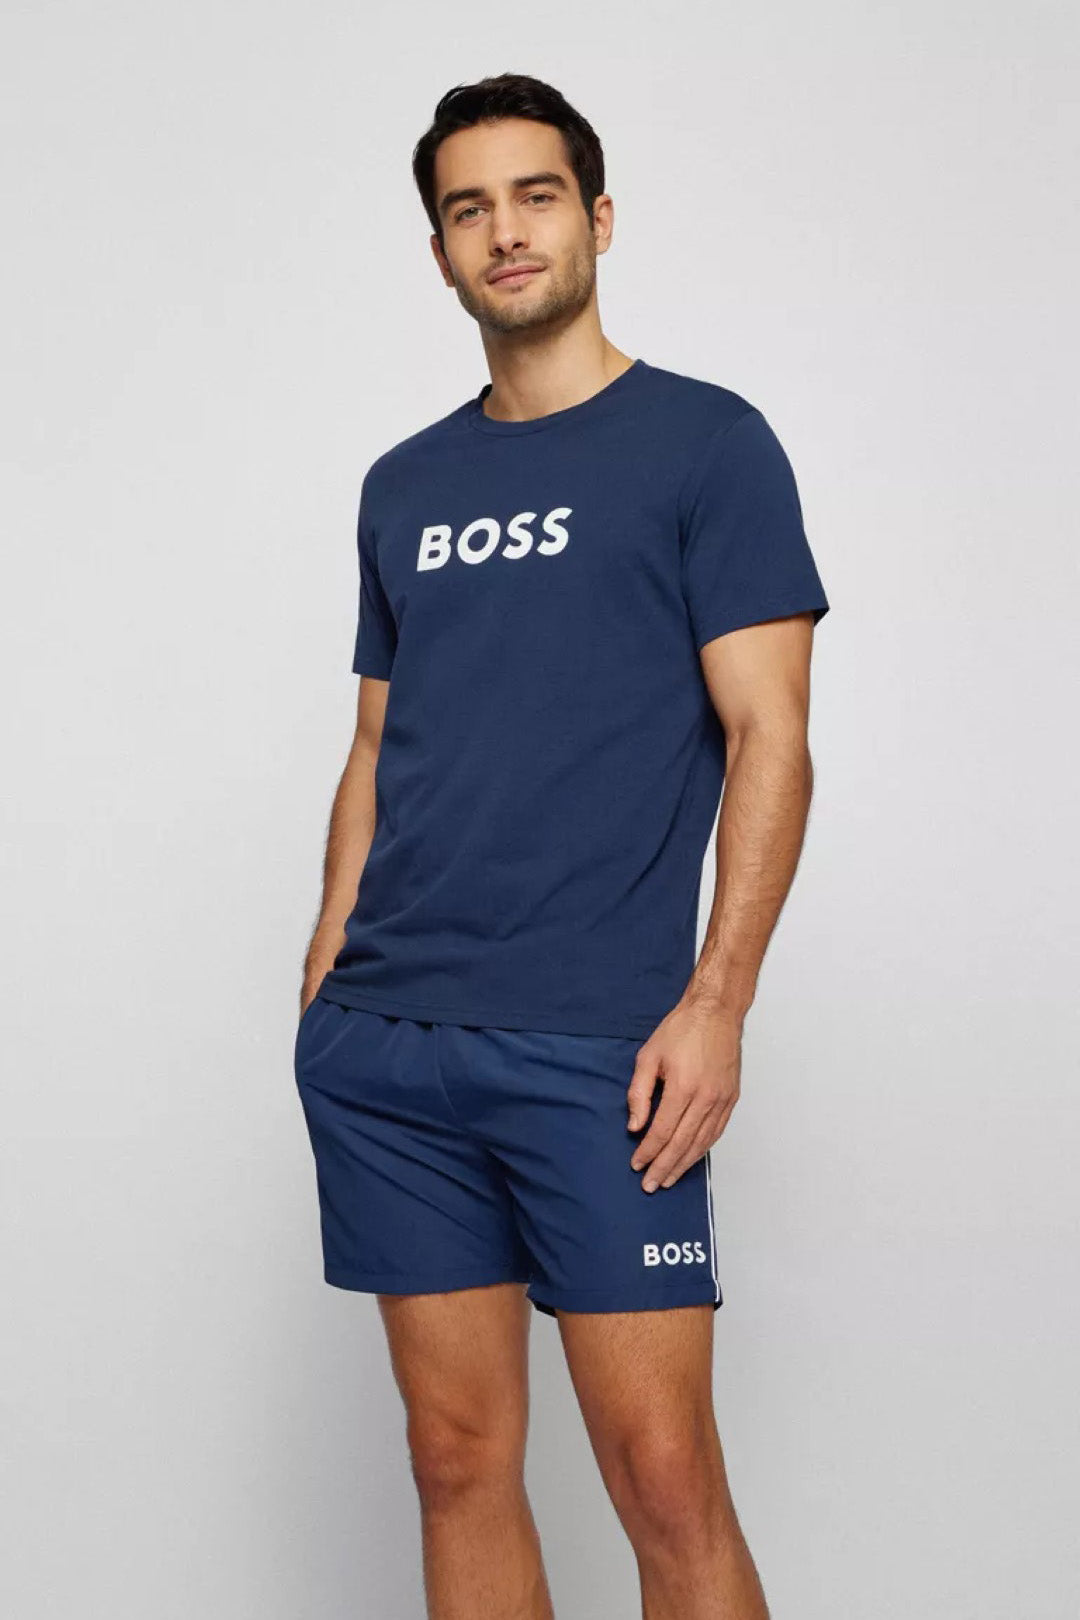 T-Shirt Hugo Boss De Couleur Marine Homme